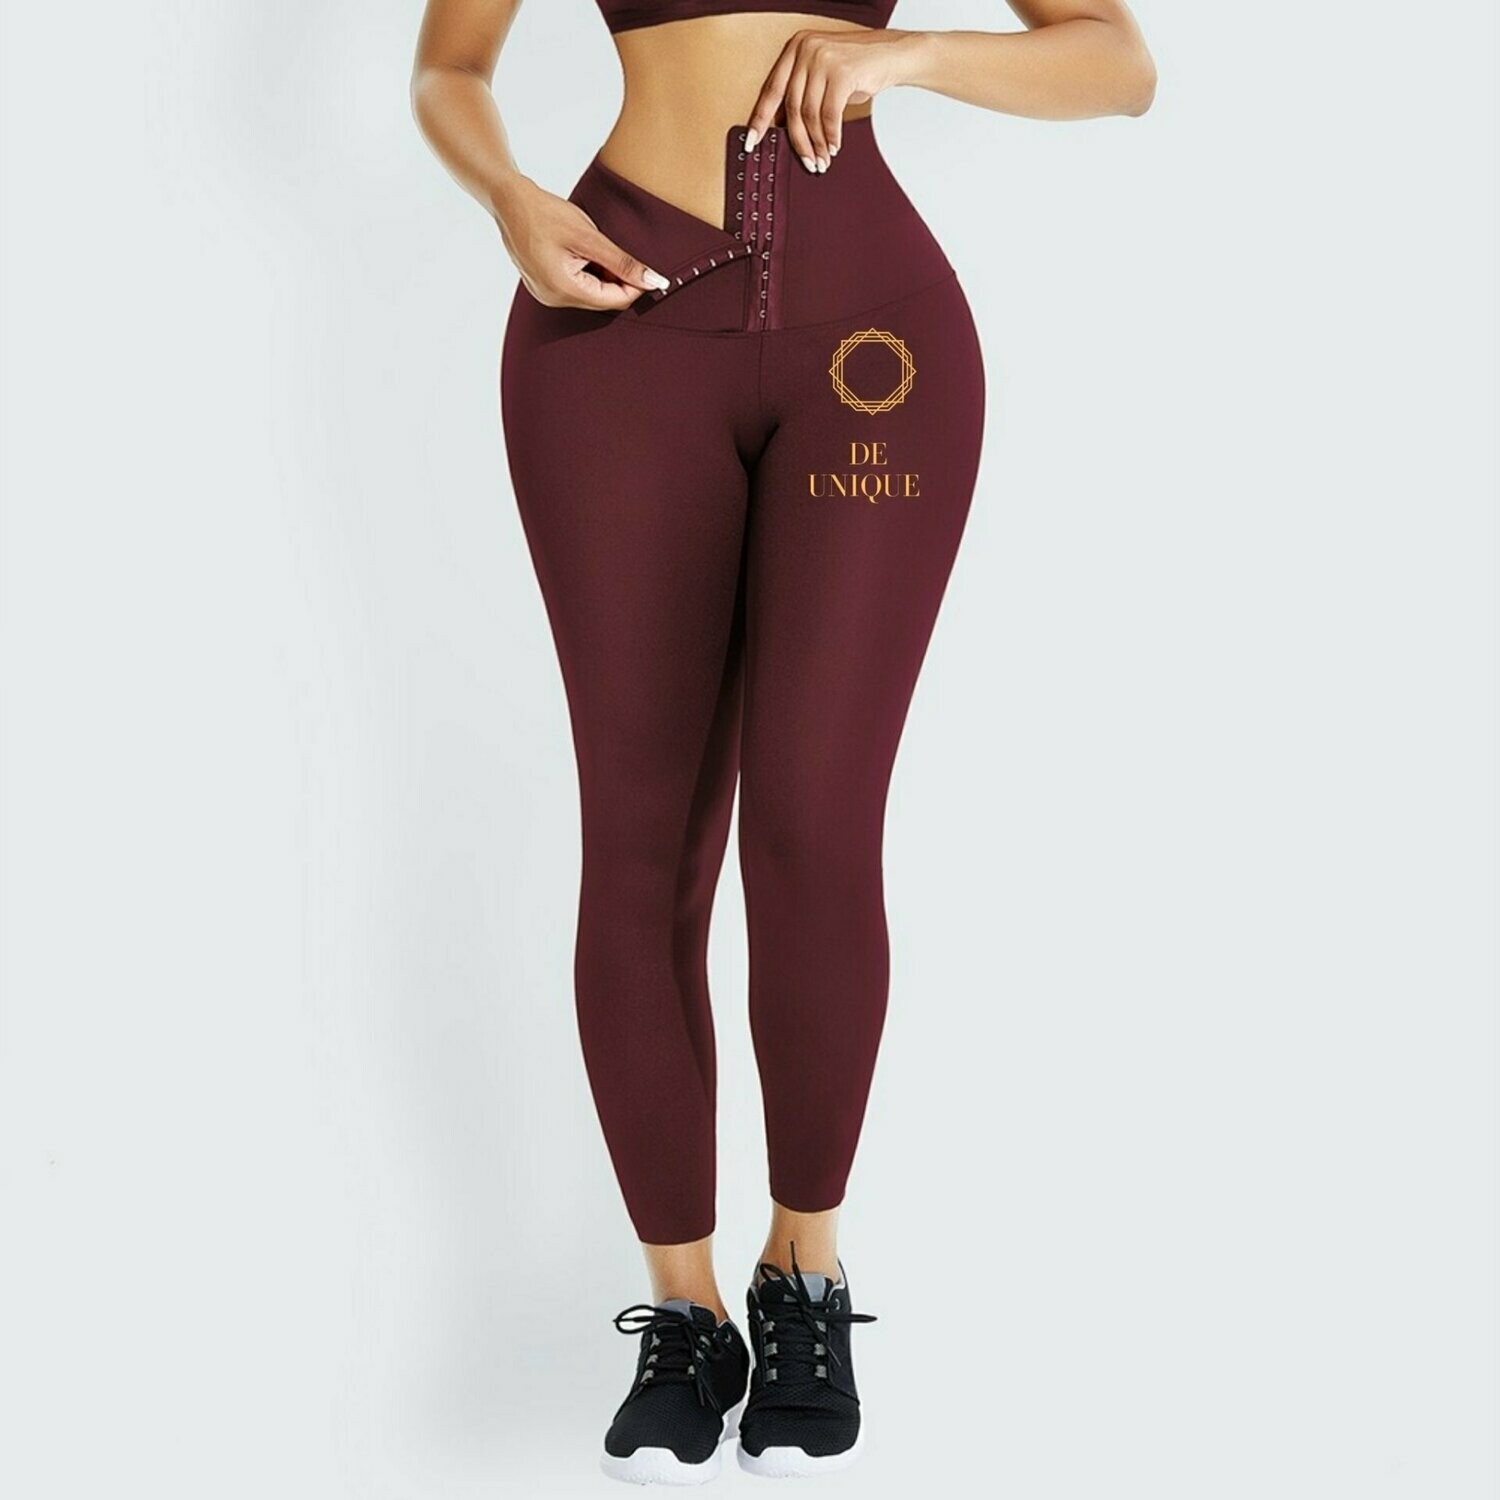 Burgundy/Red Medium High waist trainer leggings